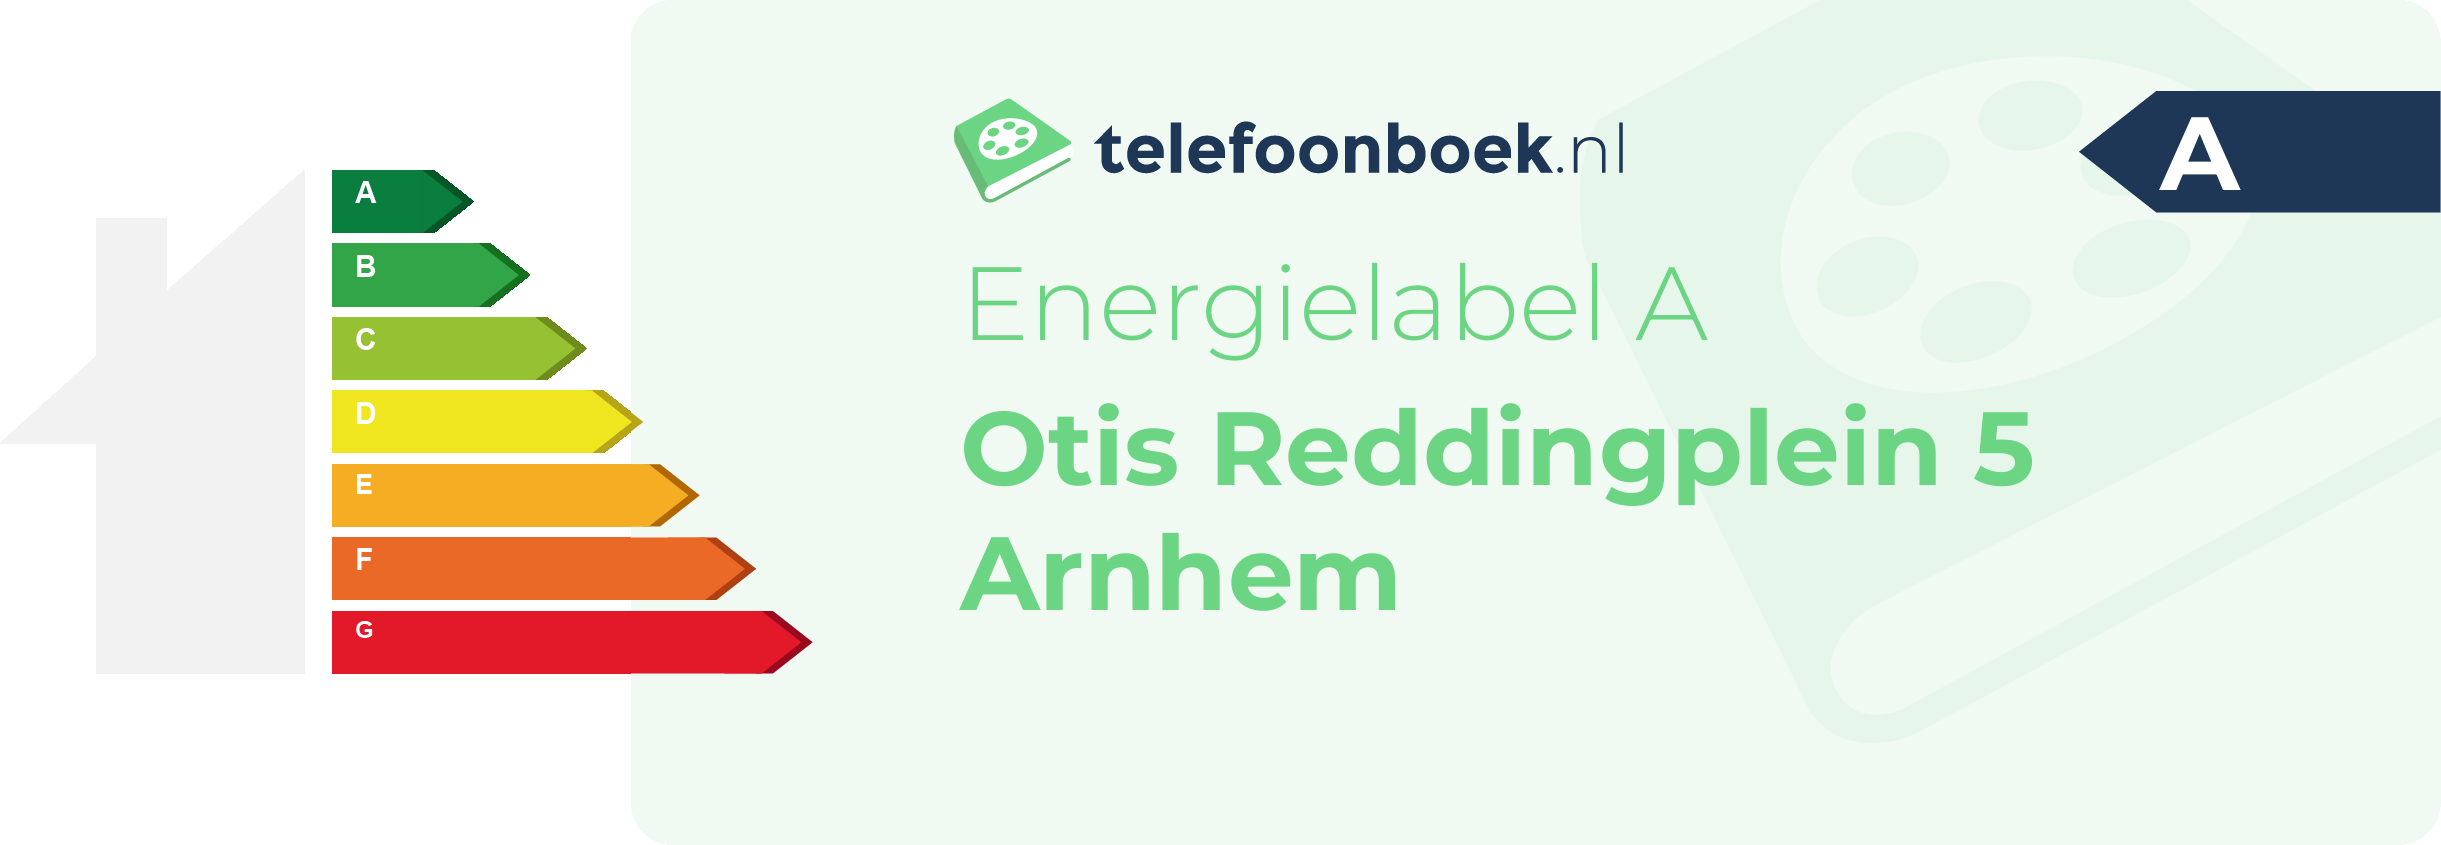 Energielabel Otis Reddingplein 5 Arnhem